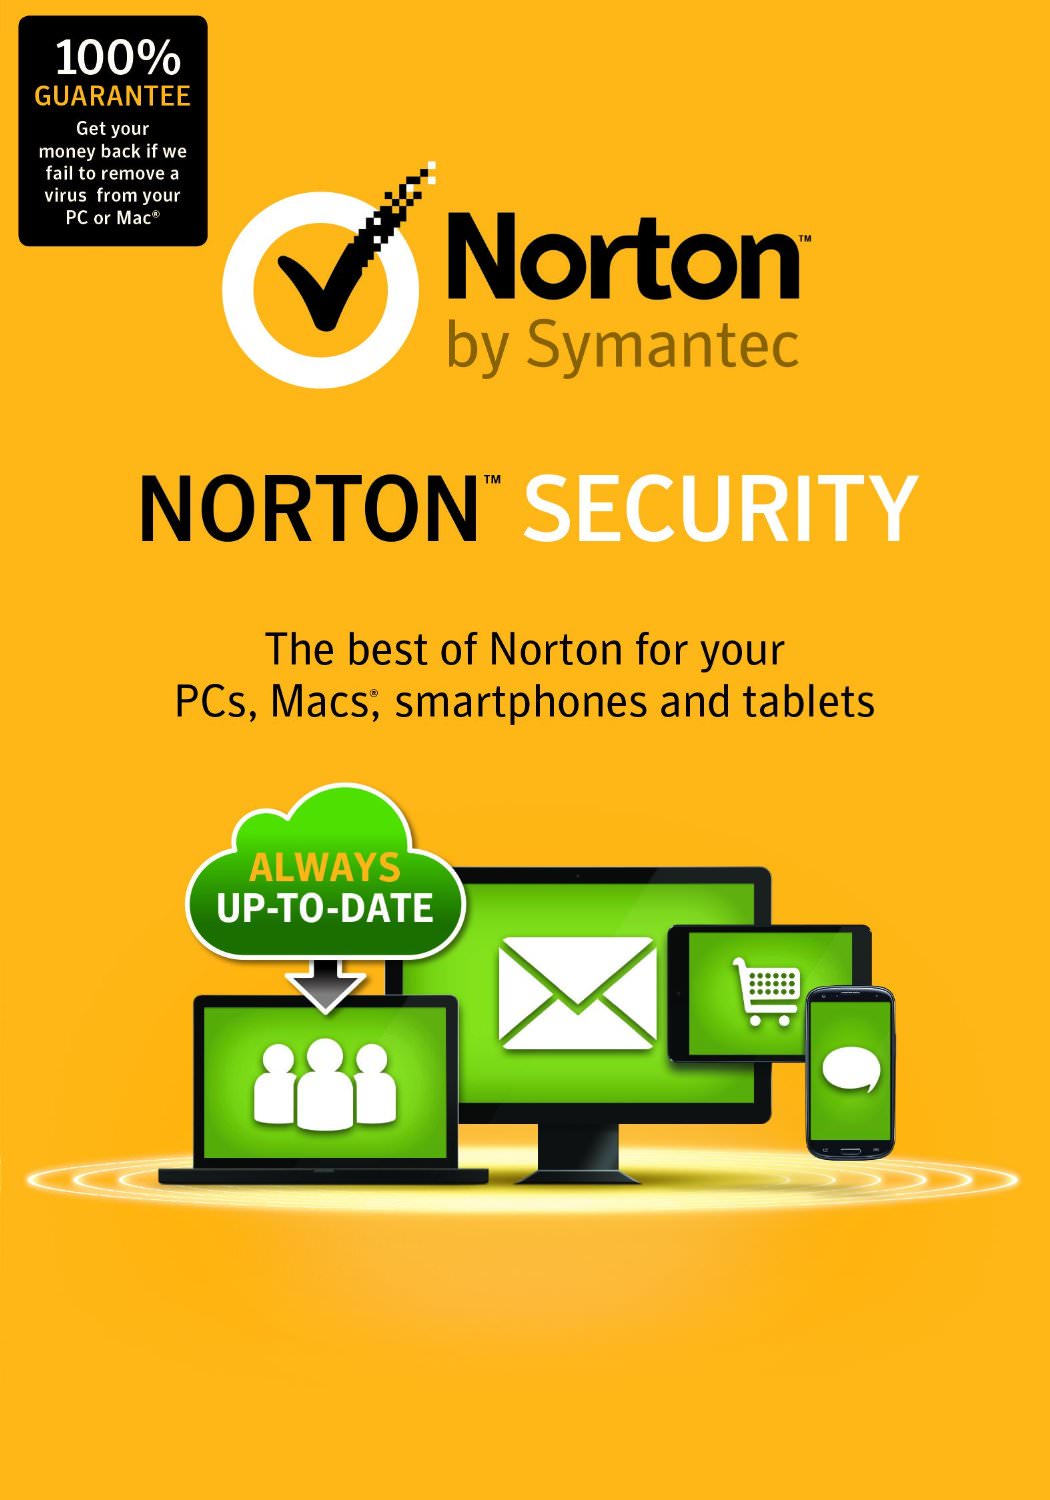 download norton antivirus free trial for 30 days